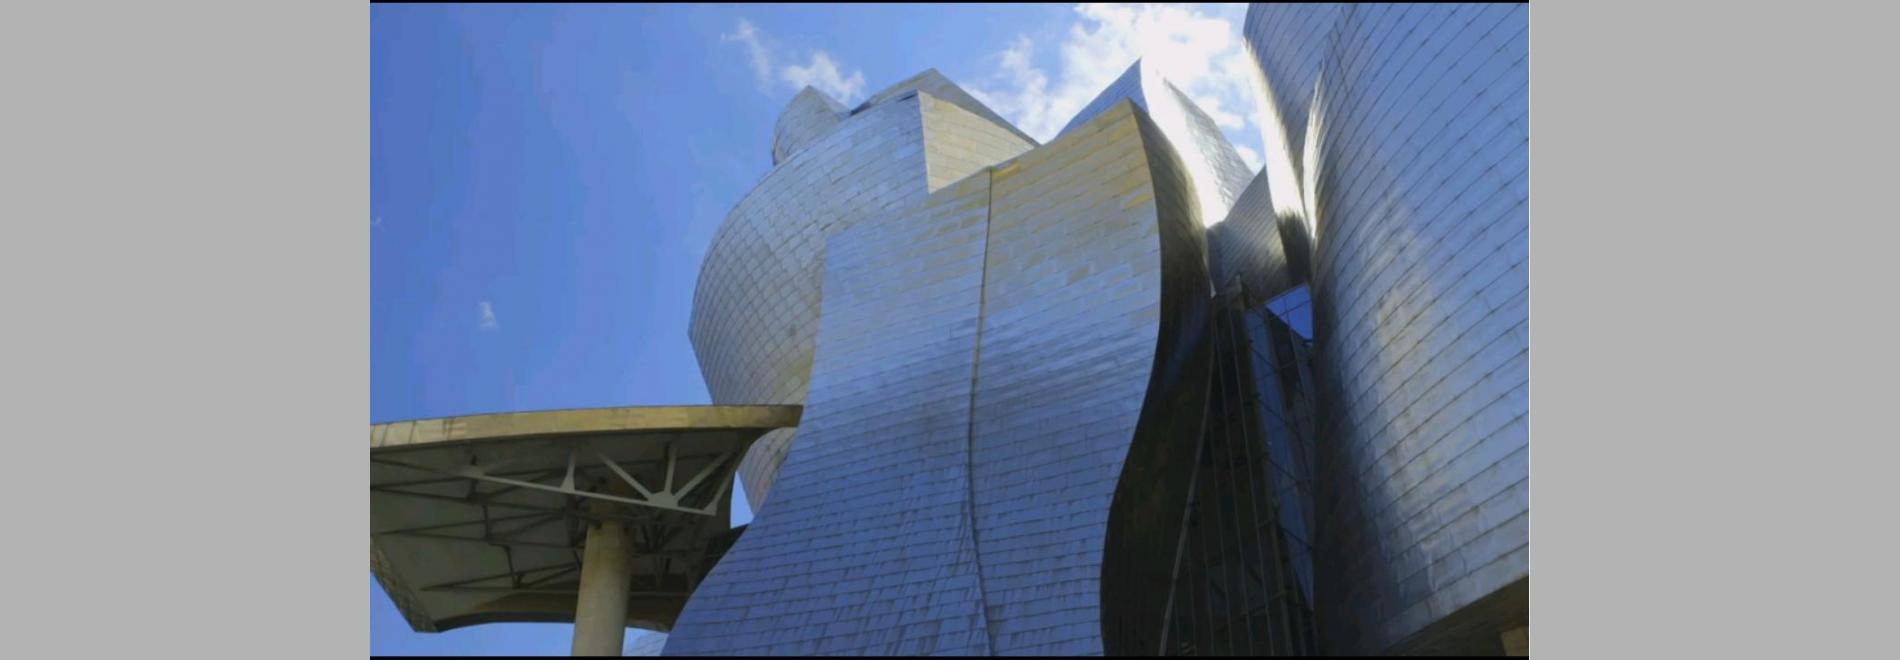 Getting Frank Gehry (Sally Aitken, 2015)